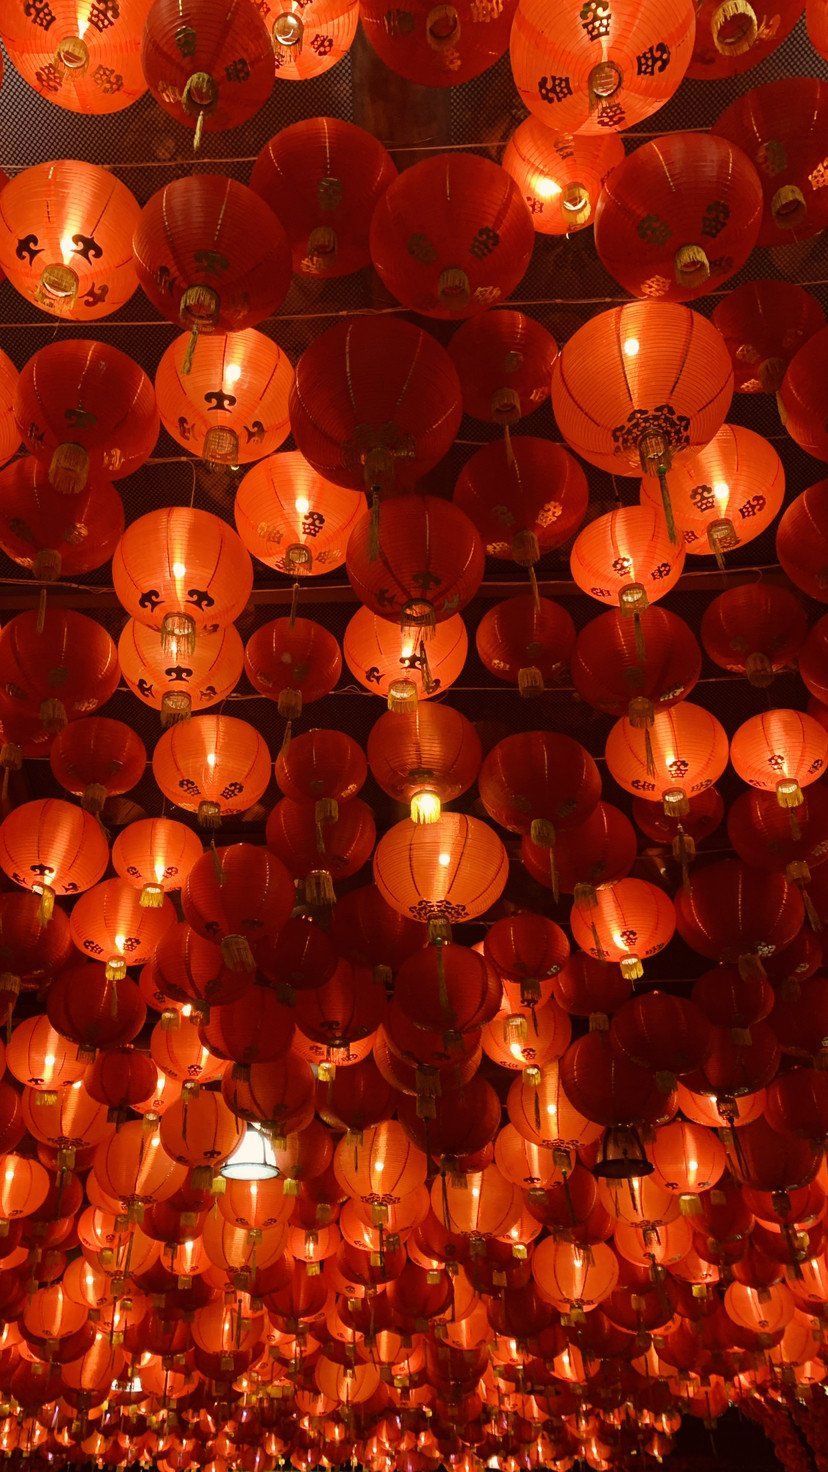 Lunar New Year Lanterns (9x16) taken on .com